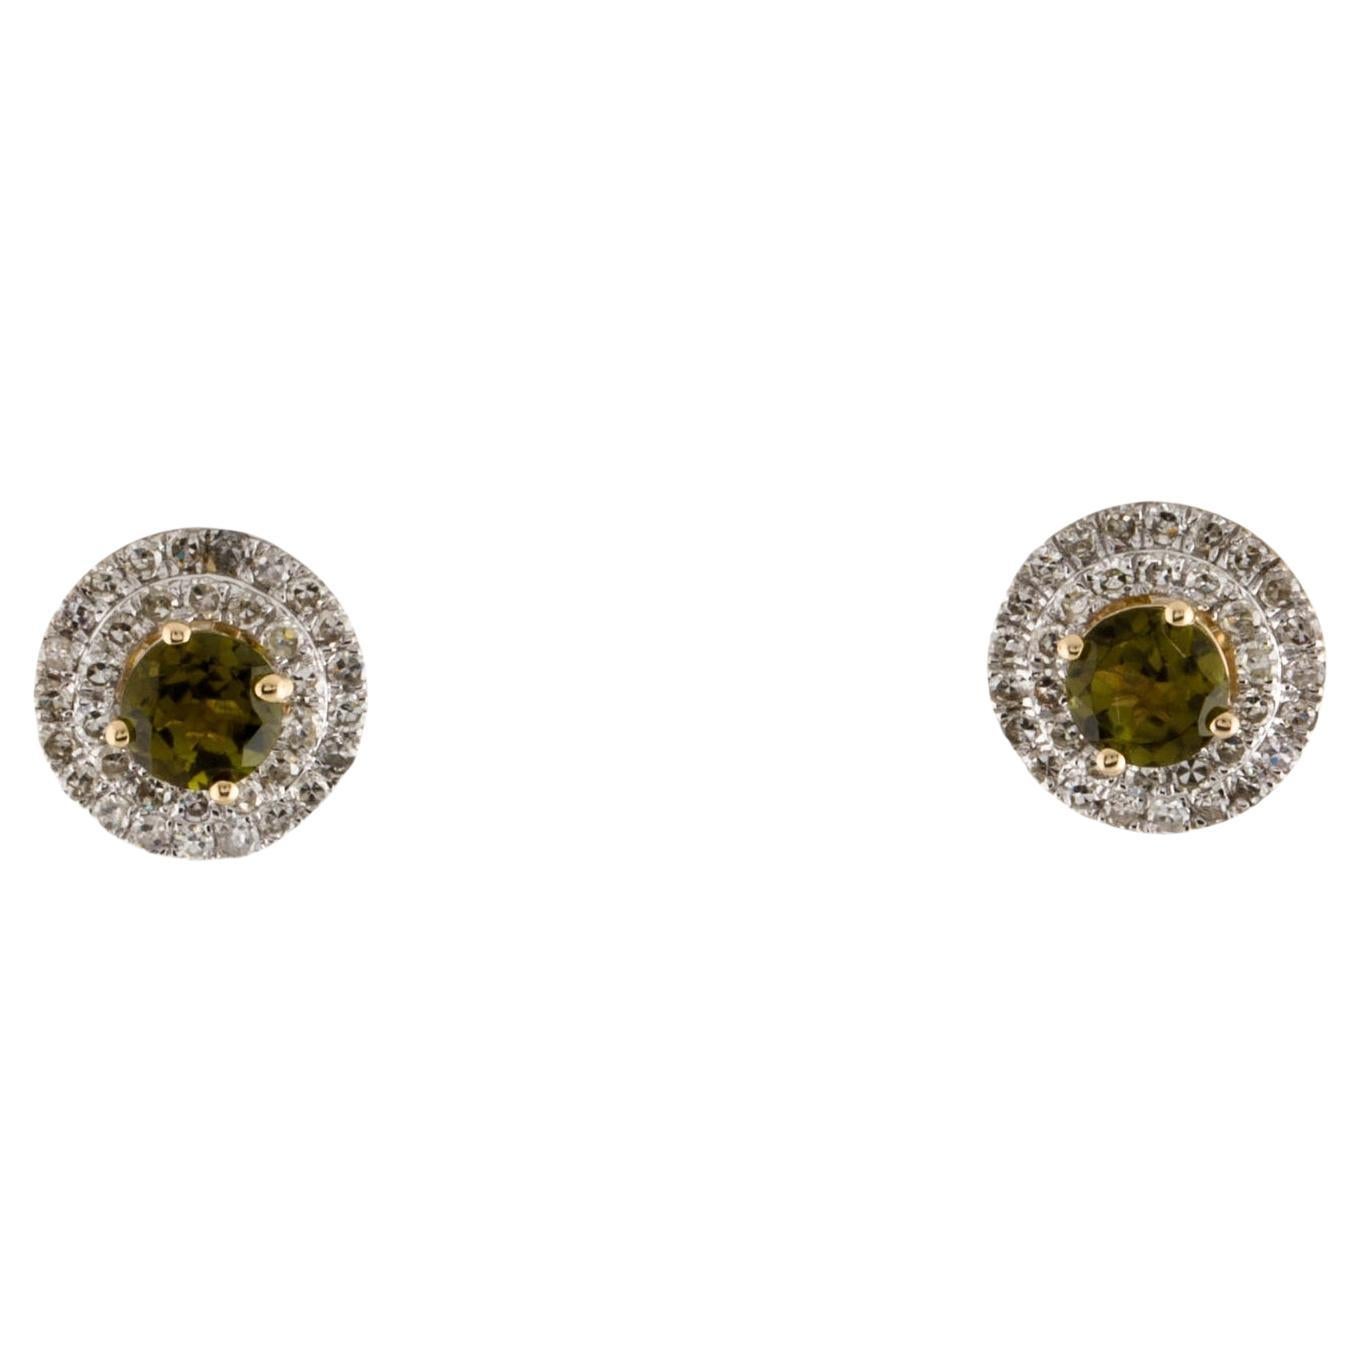 Boucles d'oreilles 14K Tourmaline & Diamant - Timeless Exquisite Gemstone Jewelry